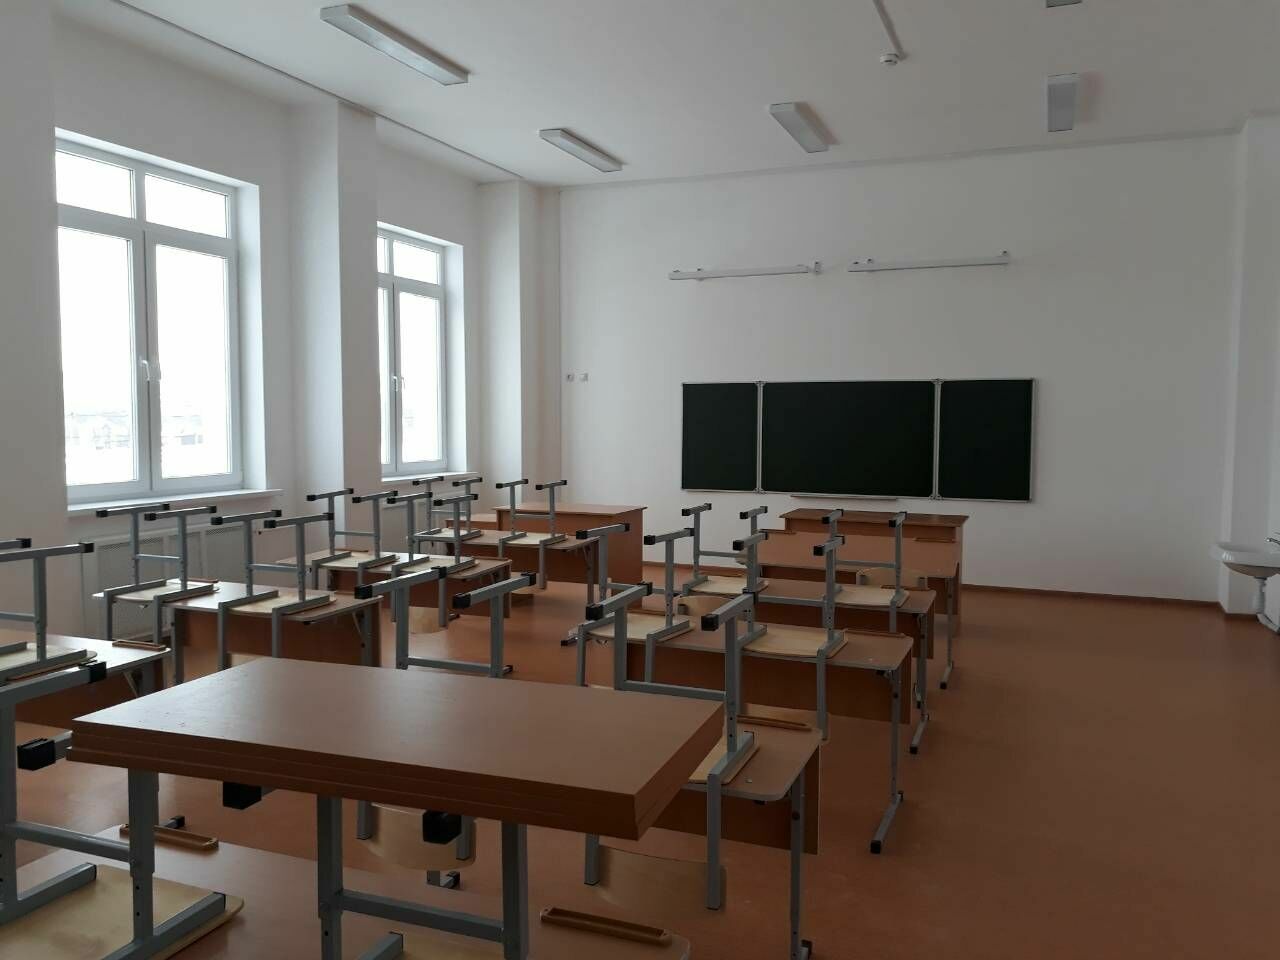 Еще одну школу в Карелии закрыли на карантин из-за коронавируса